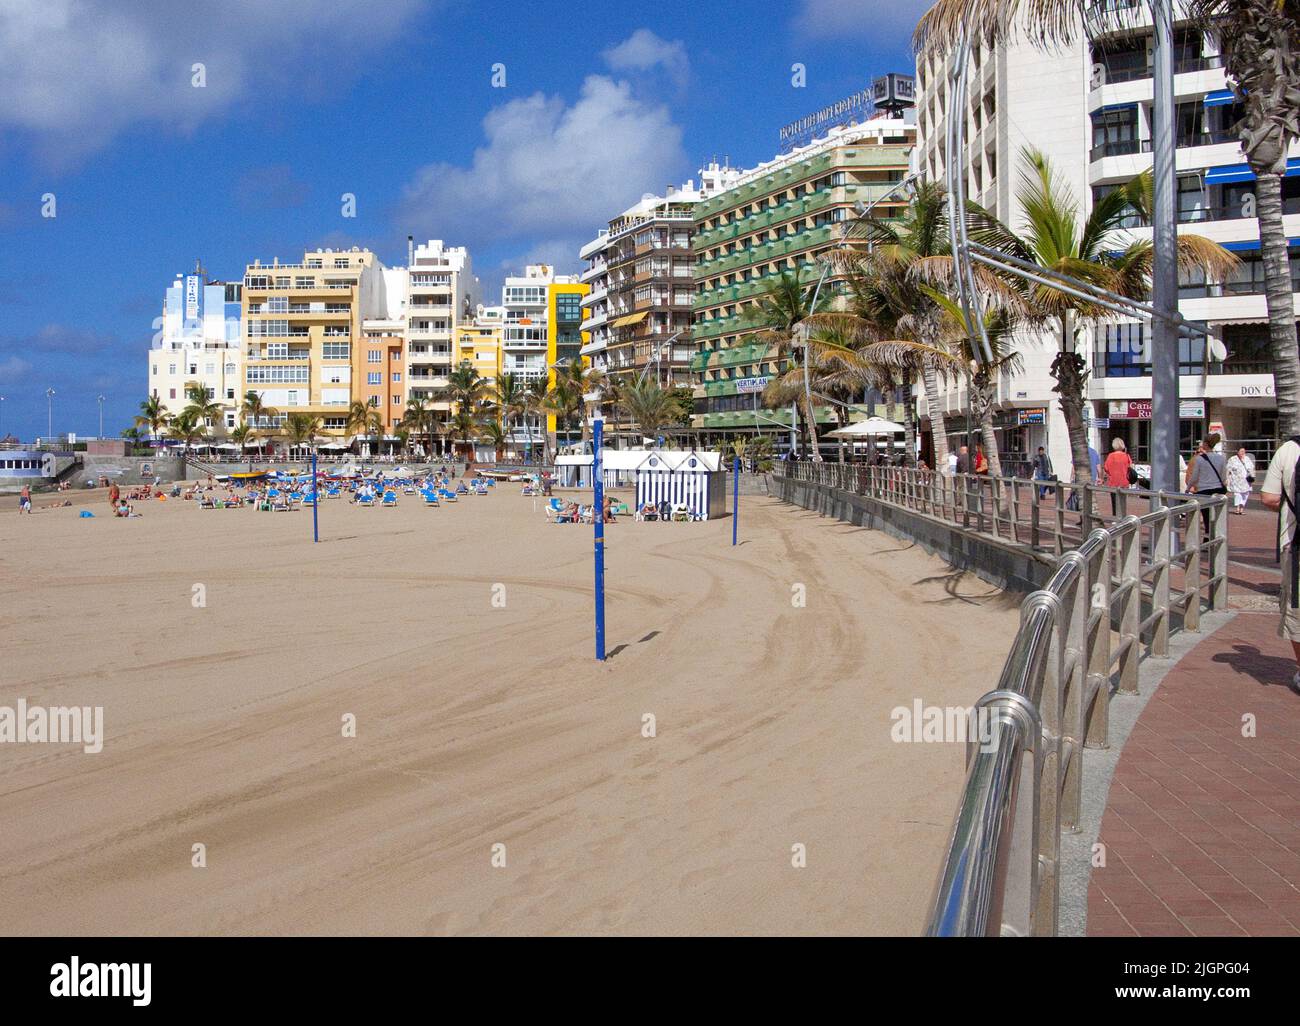 Promenade à Playa de las Canteras, Las Palmas, Grand Canary, îles Canaries, Espagne, Europe Banque D'Images